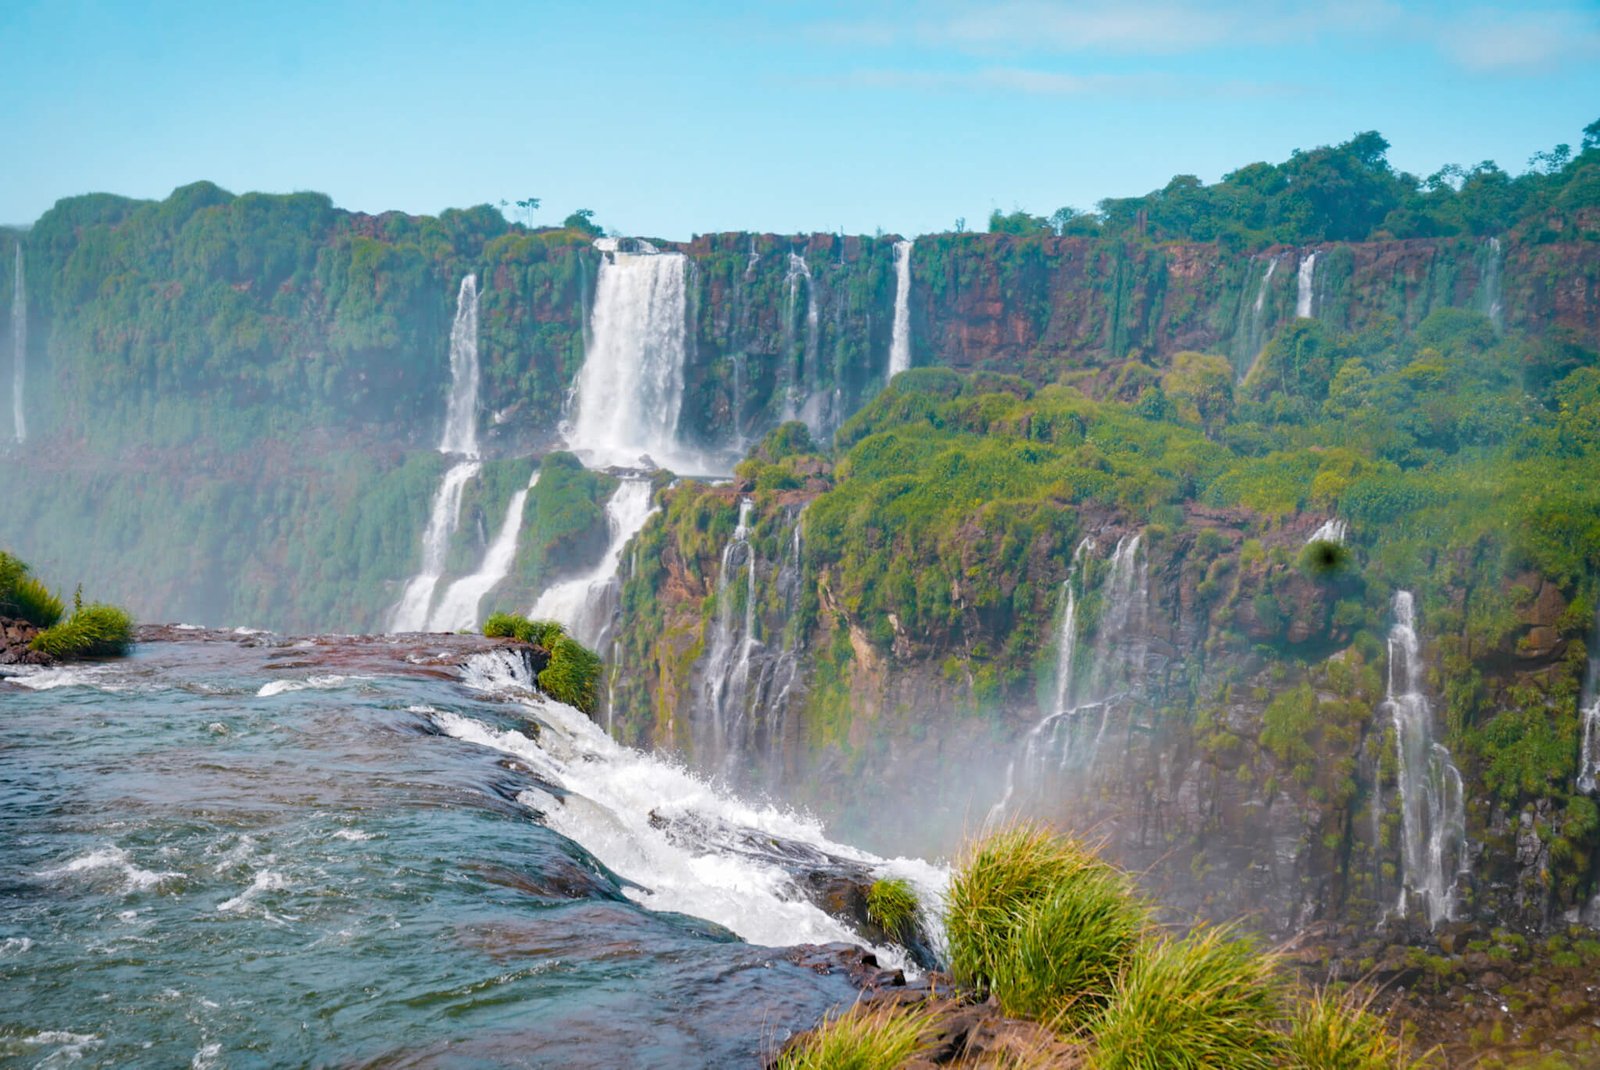 Brazil side of Iguazu Falls